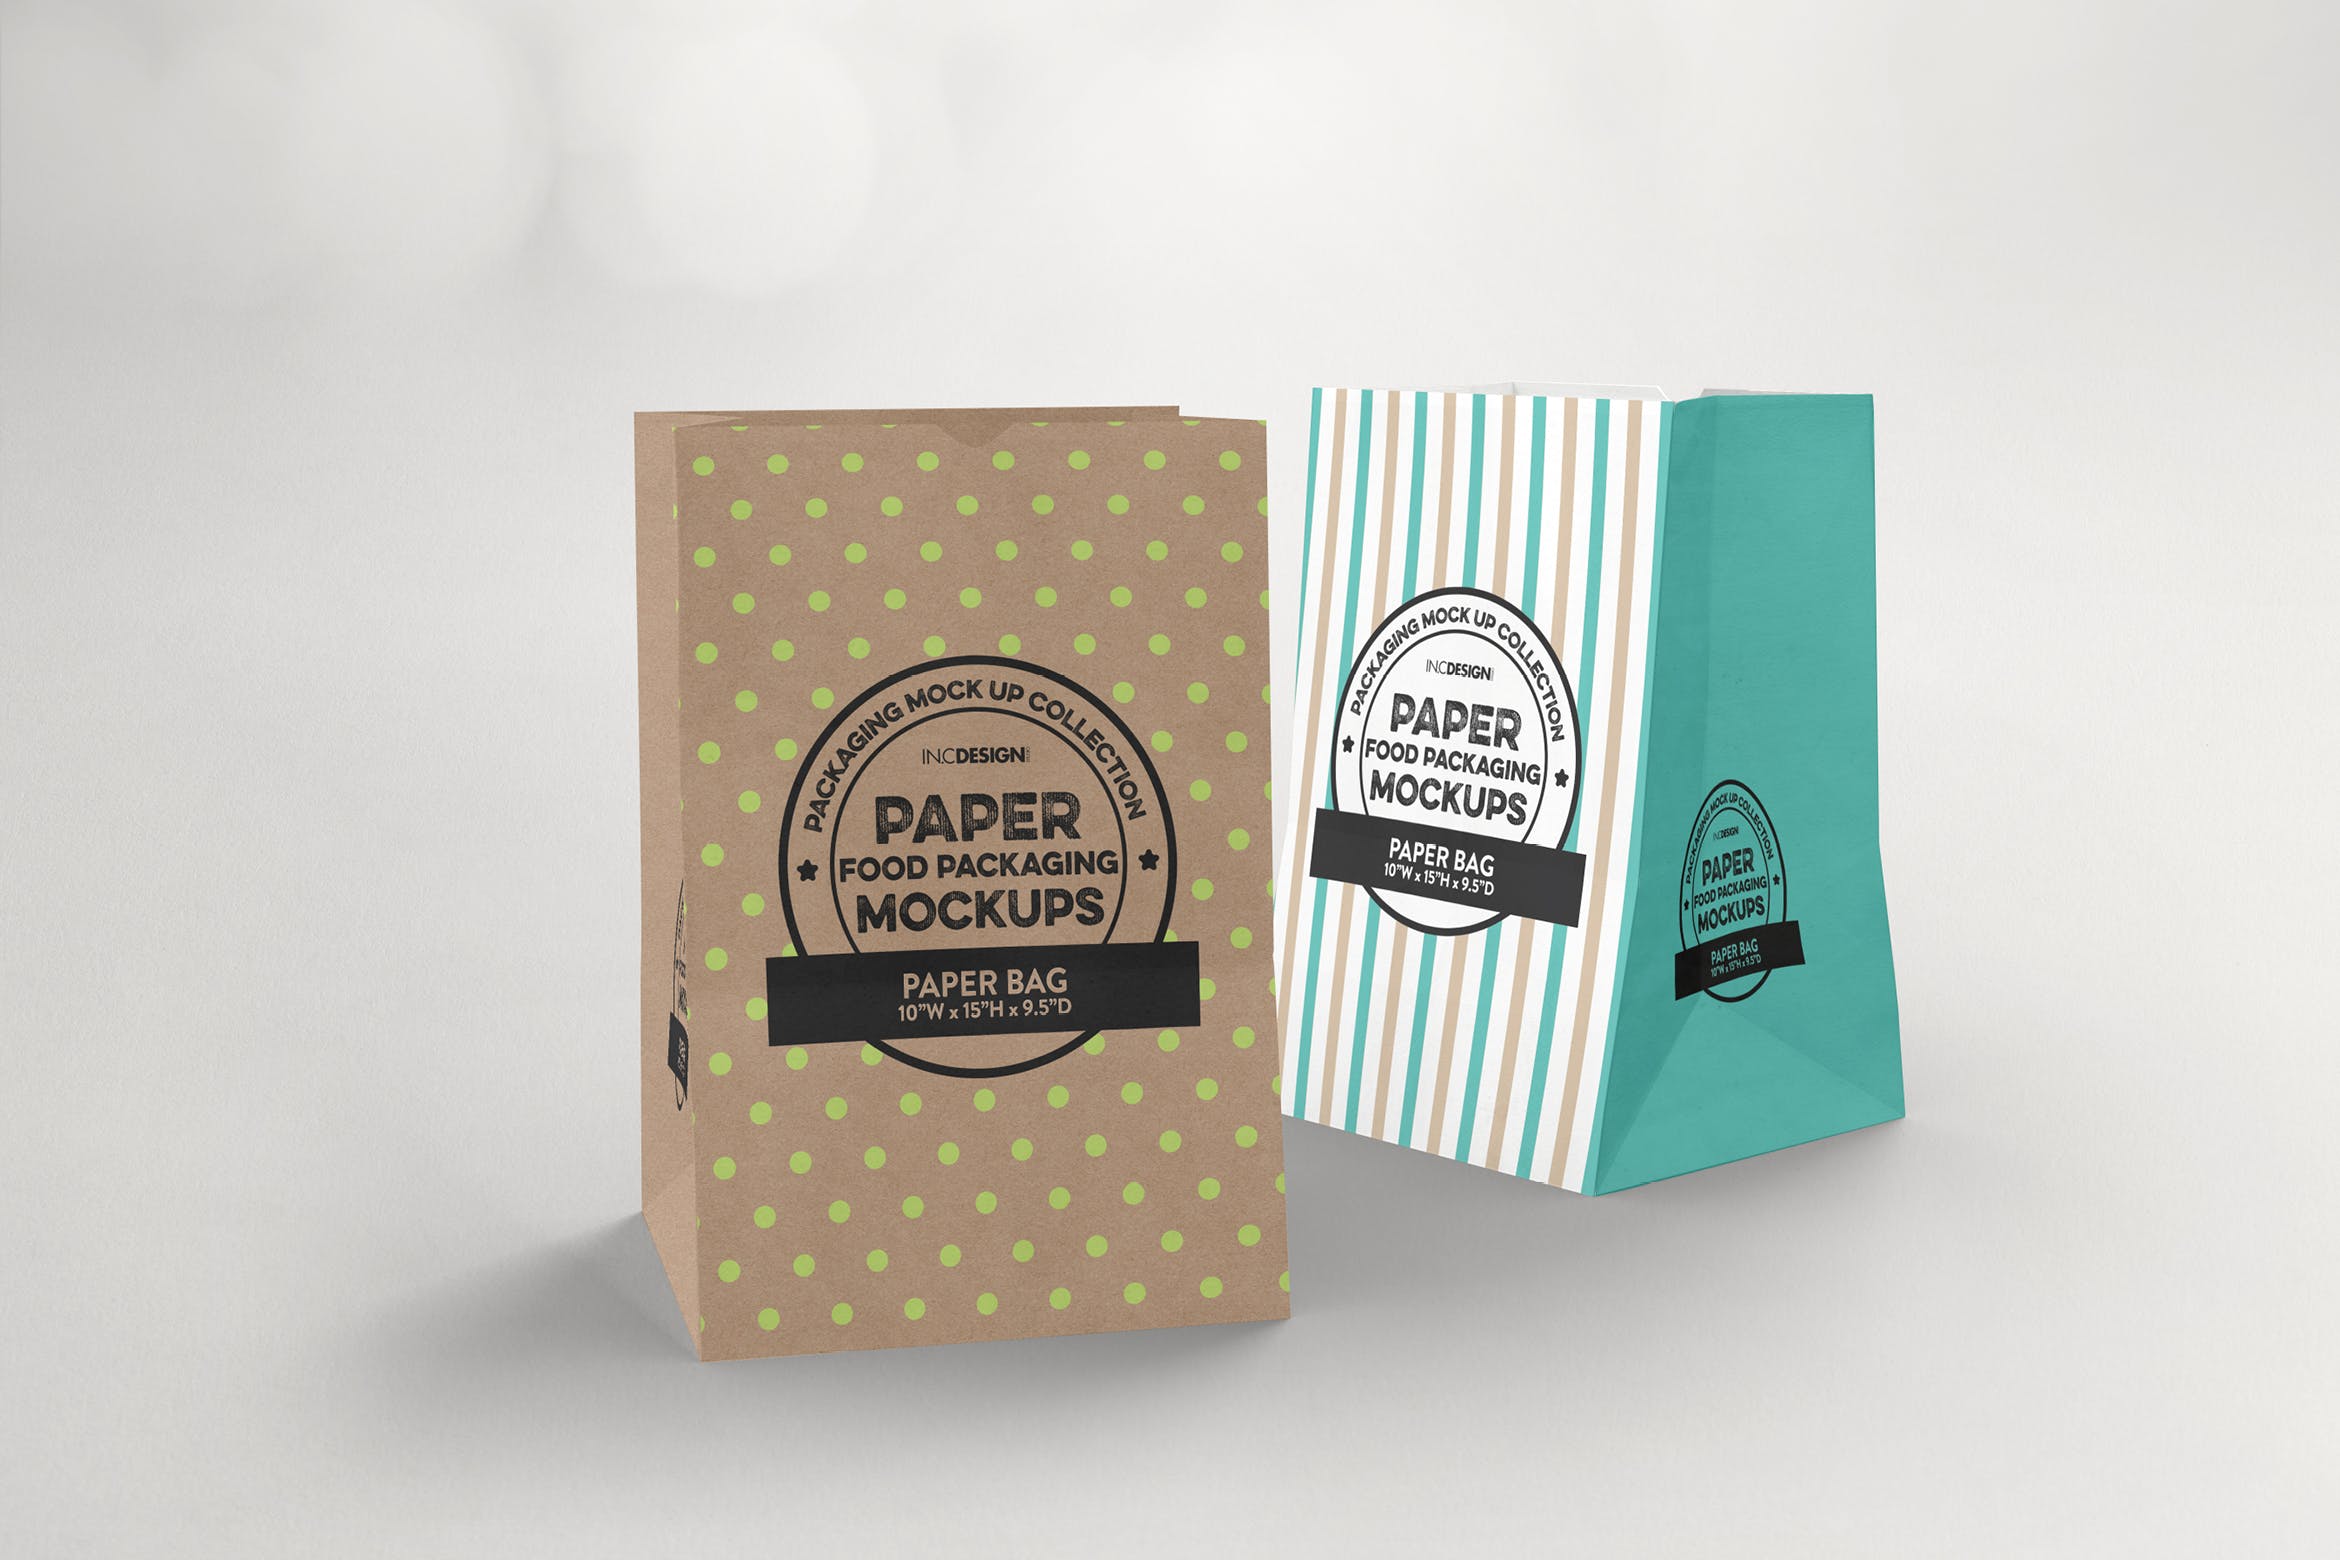 杂货纸袋包装设计效果图16设计网精选 Grocery Paper Bags Packaging Mockup插图